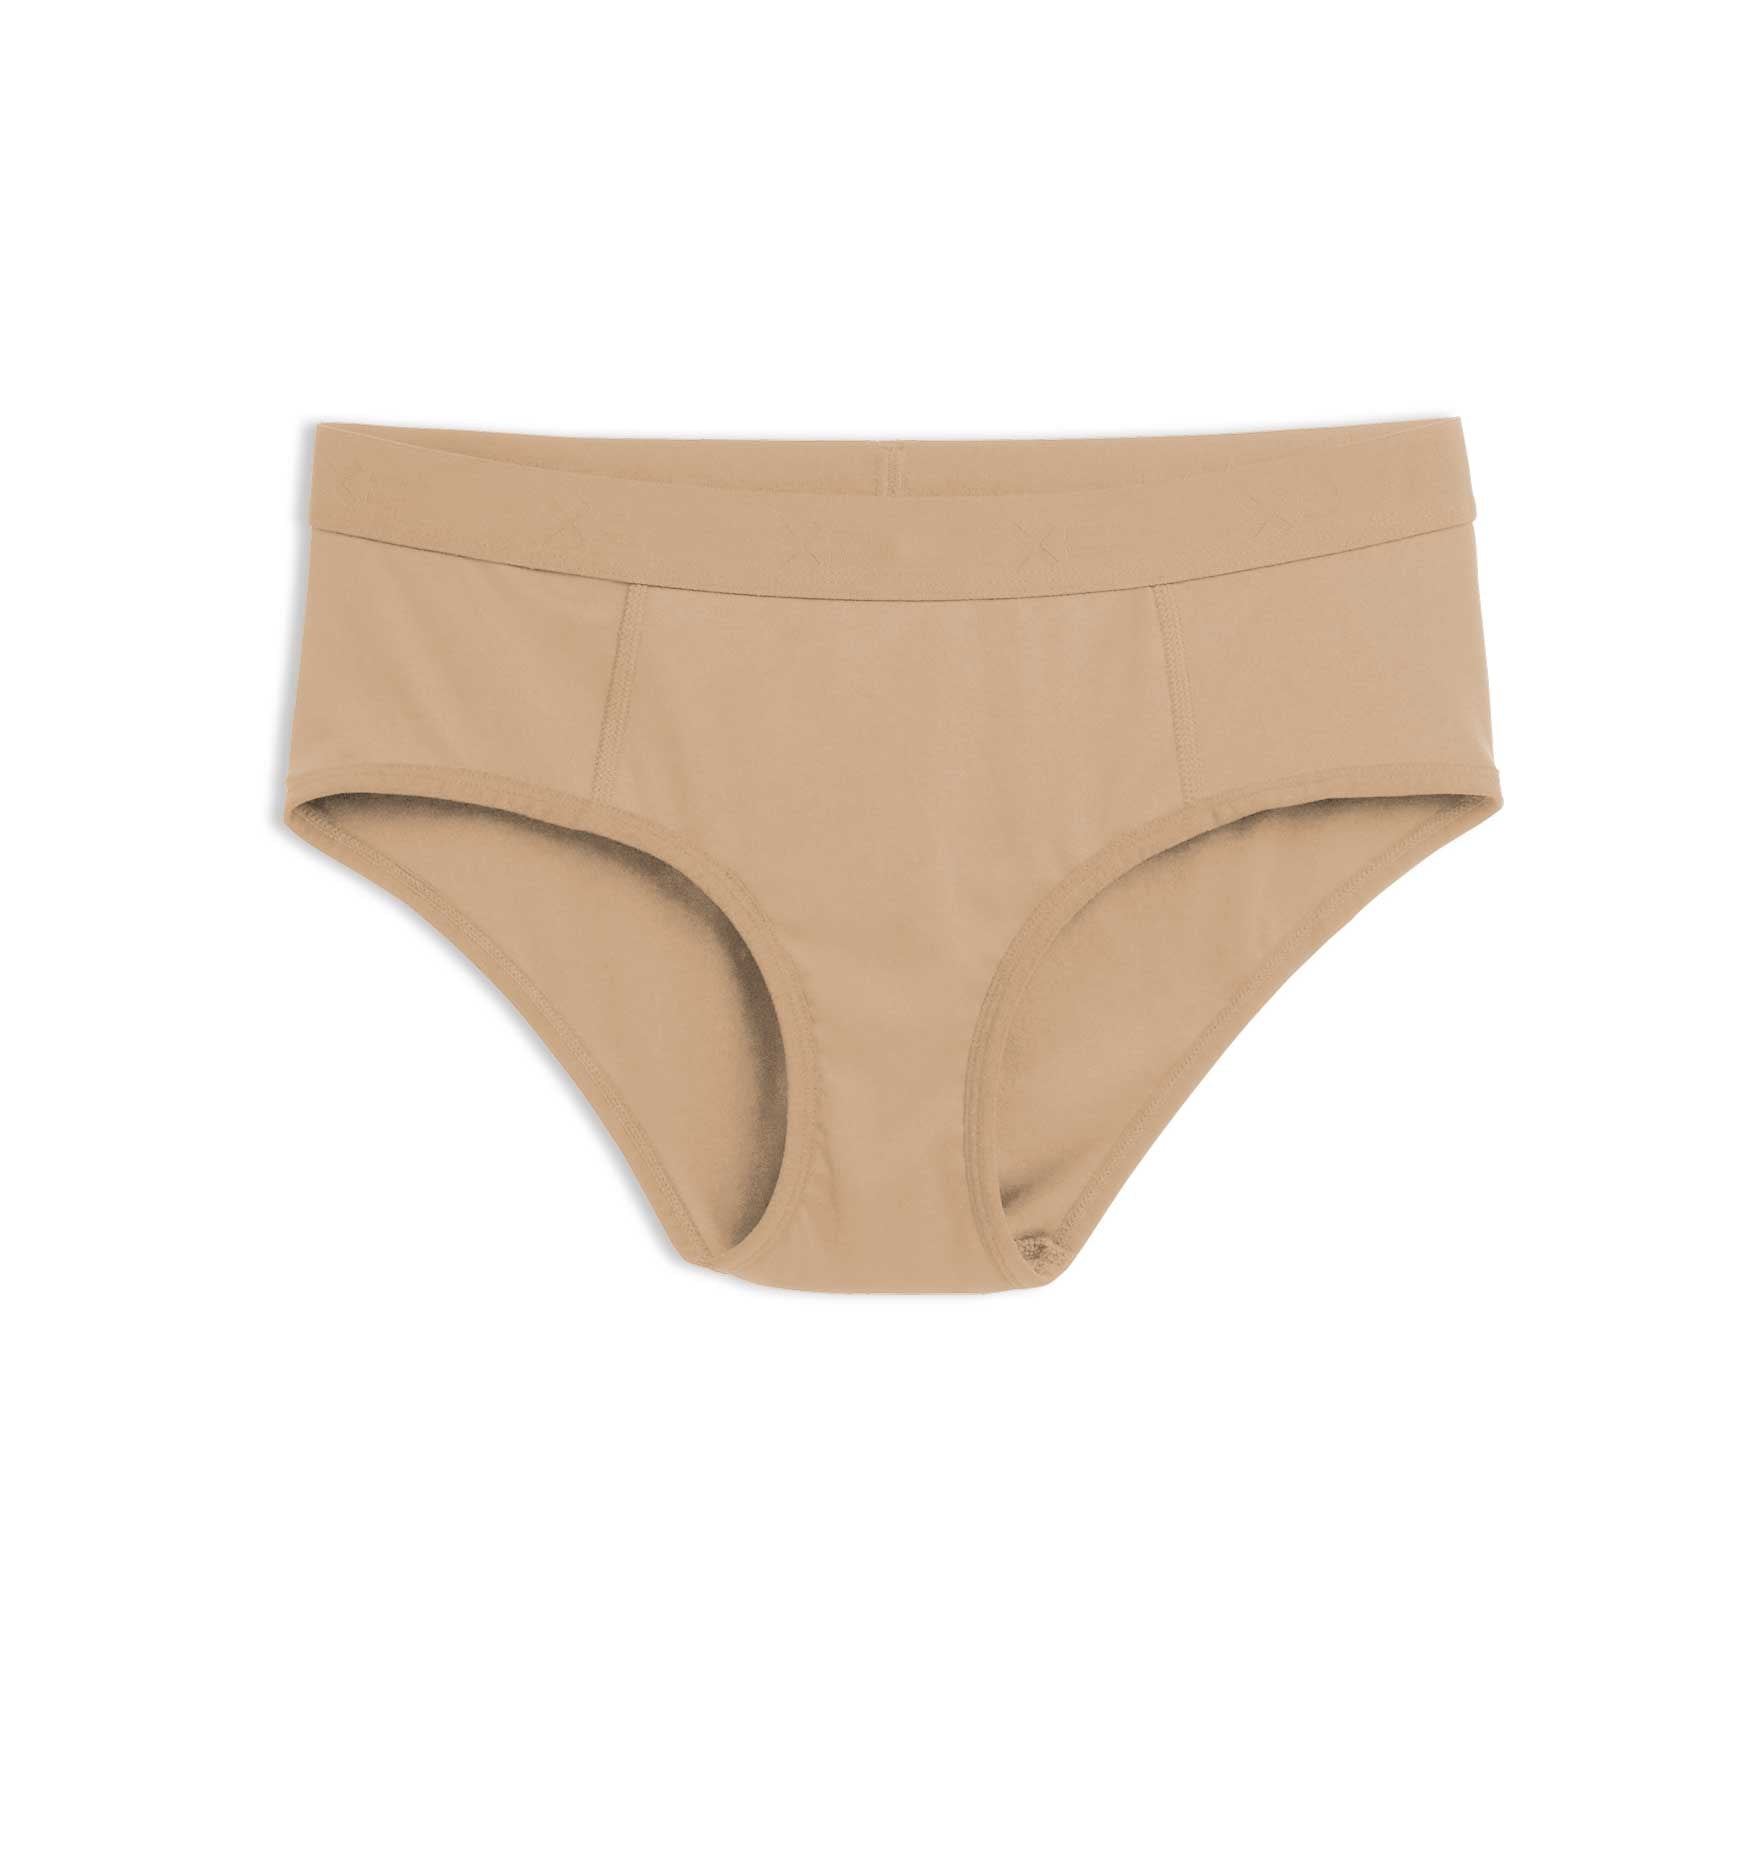 LittleForBig Gender Inclusive Little Secret Tucking Gaff Panties